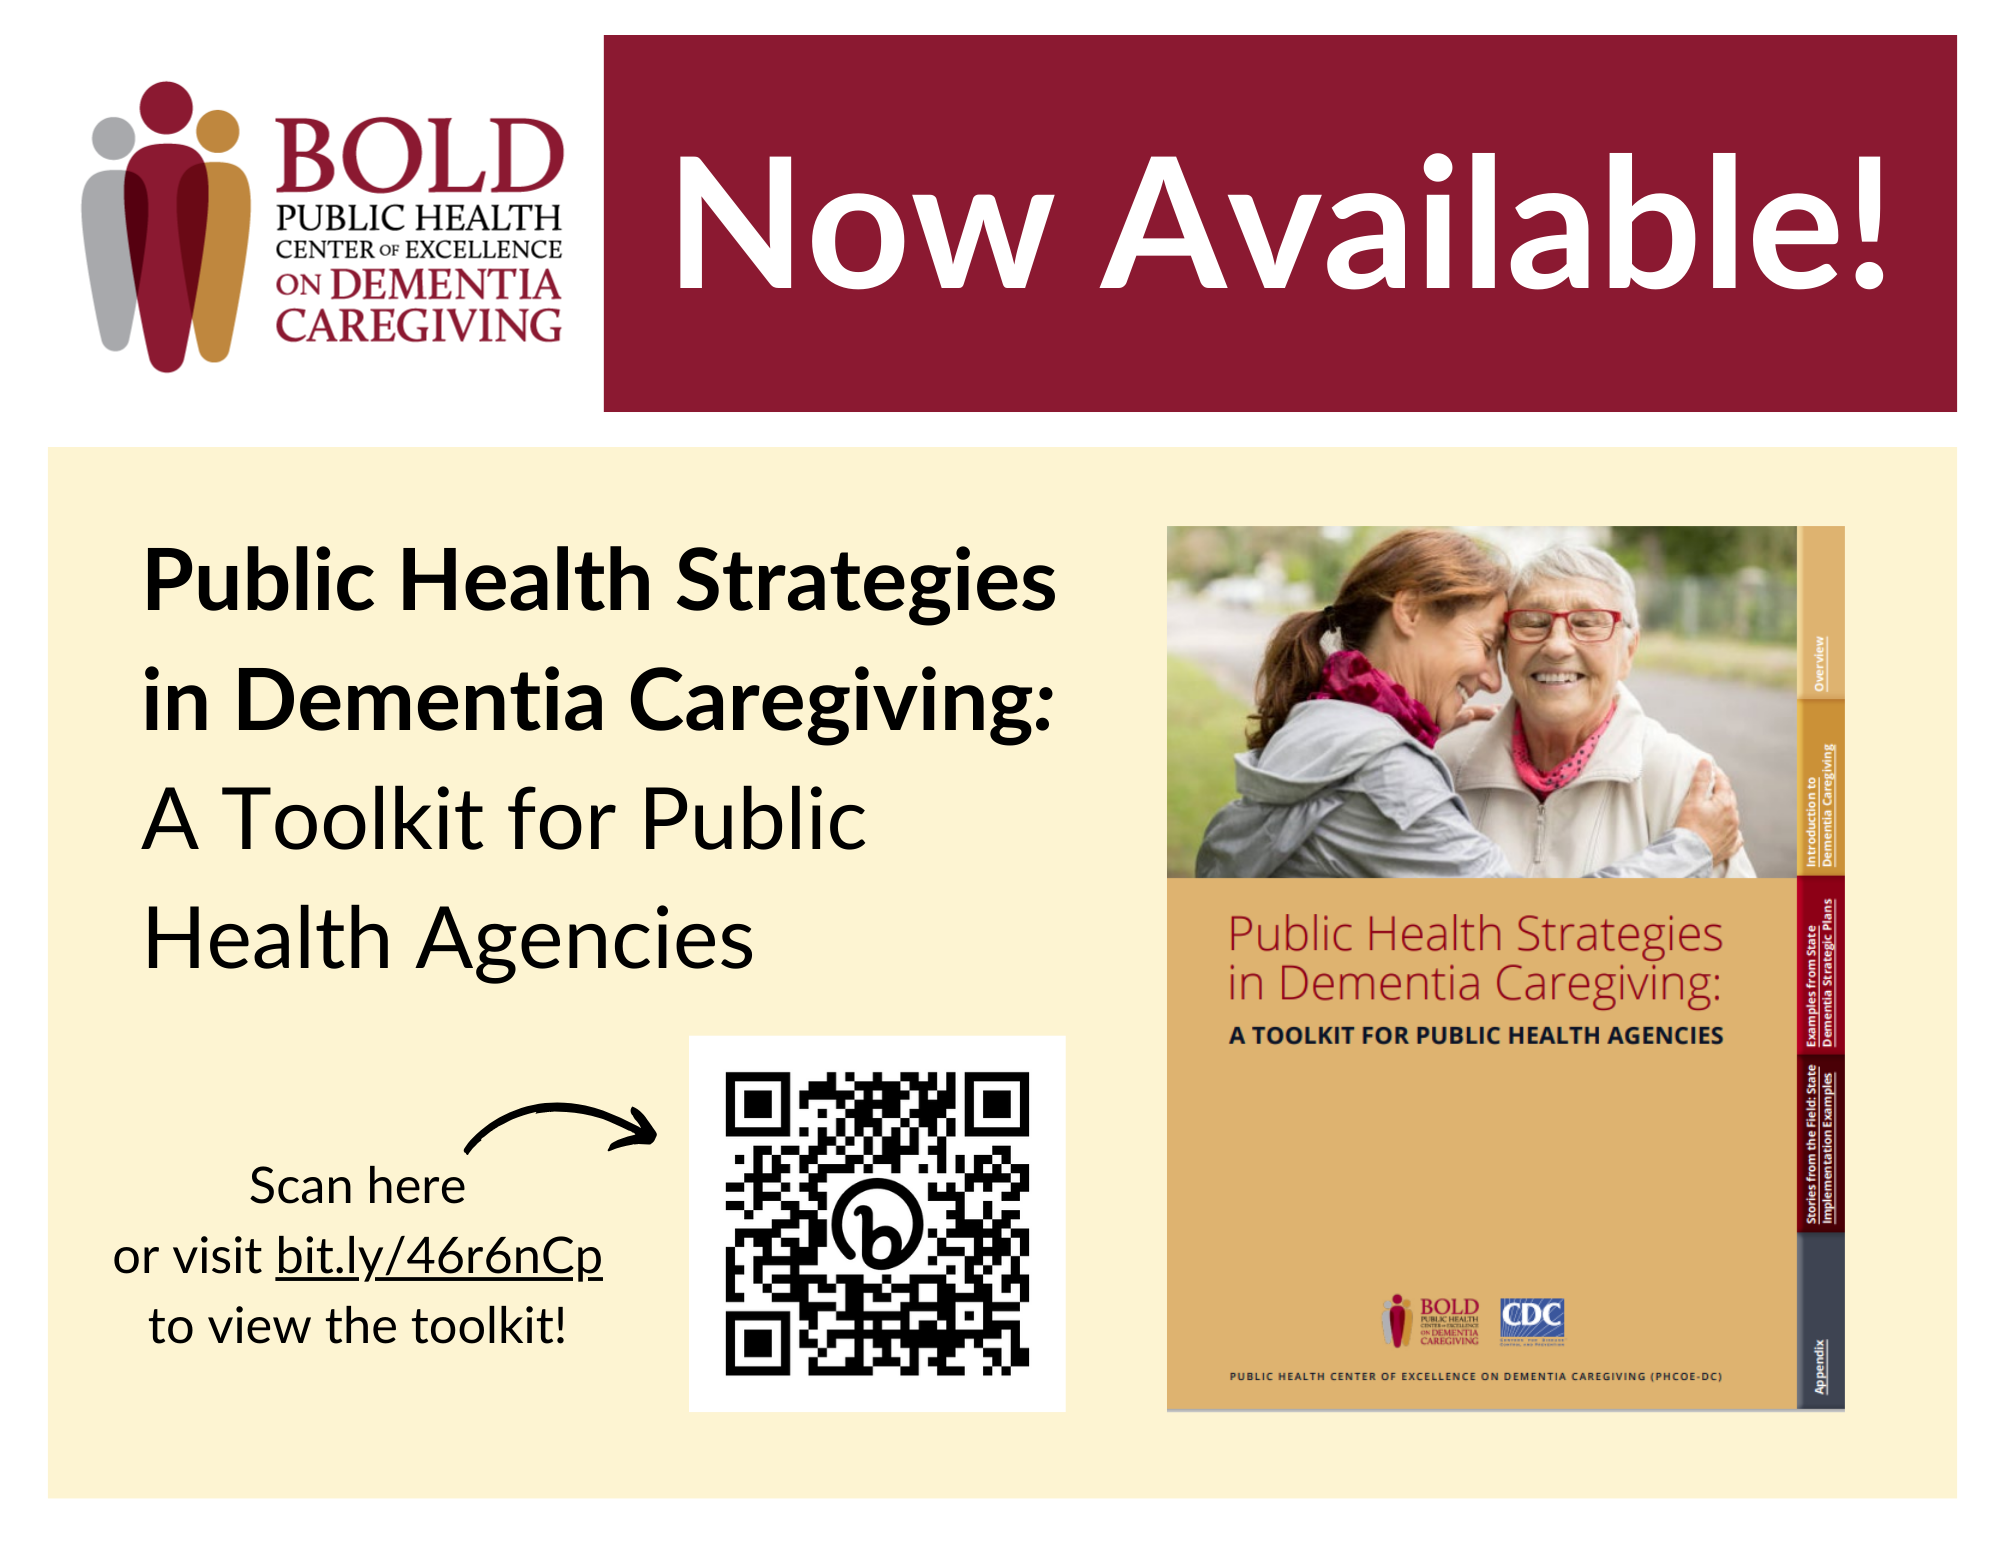 Dementia Care: Building Dementia-Friendly Communities Toolkit